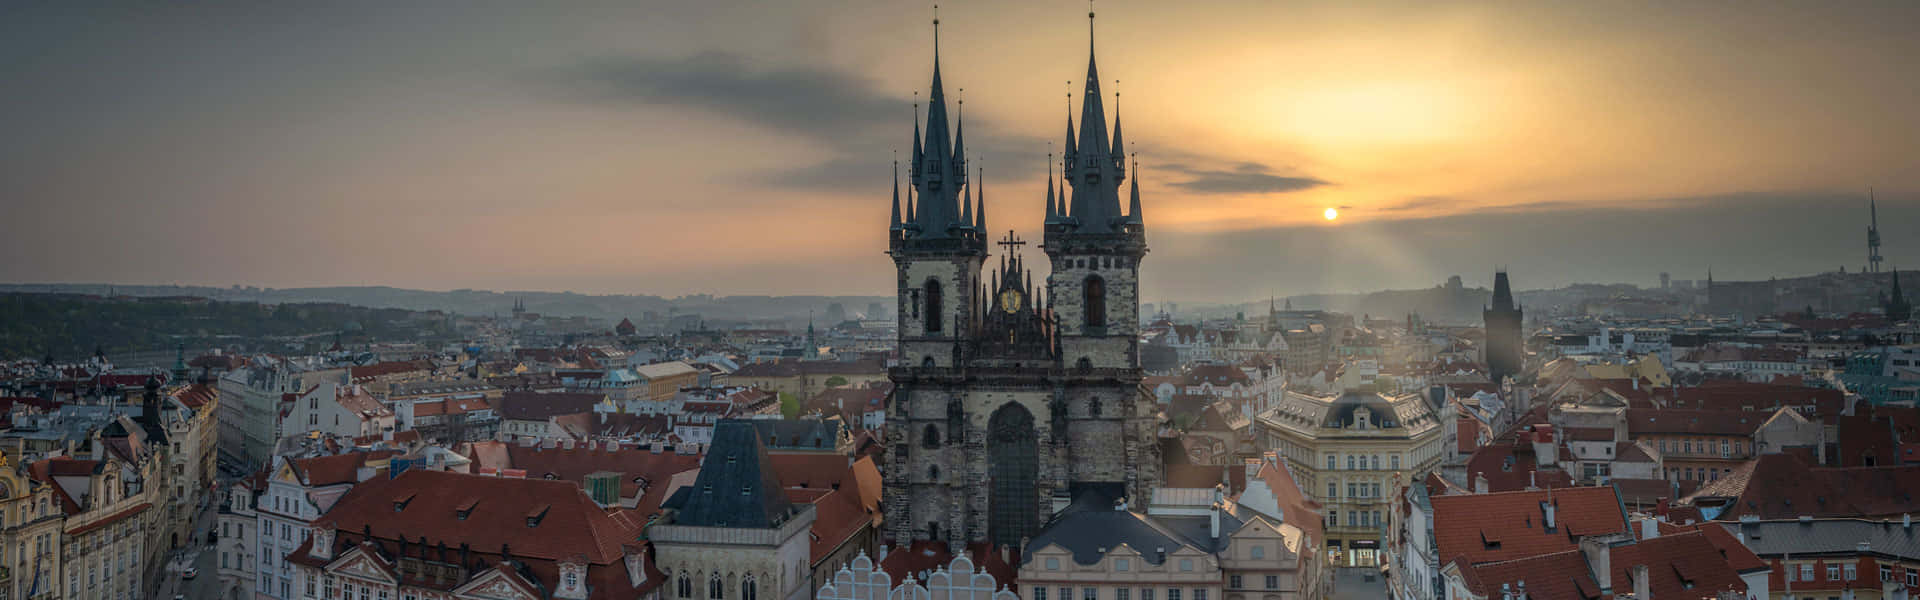 Tyn Church: An Iconic Gothic Masterpiece Amid Prague's Skyline Wallpaper